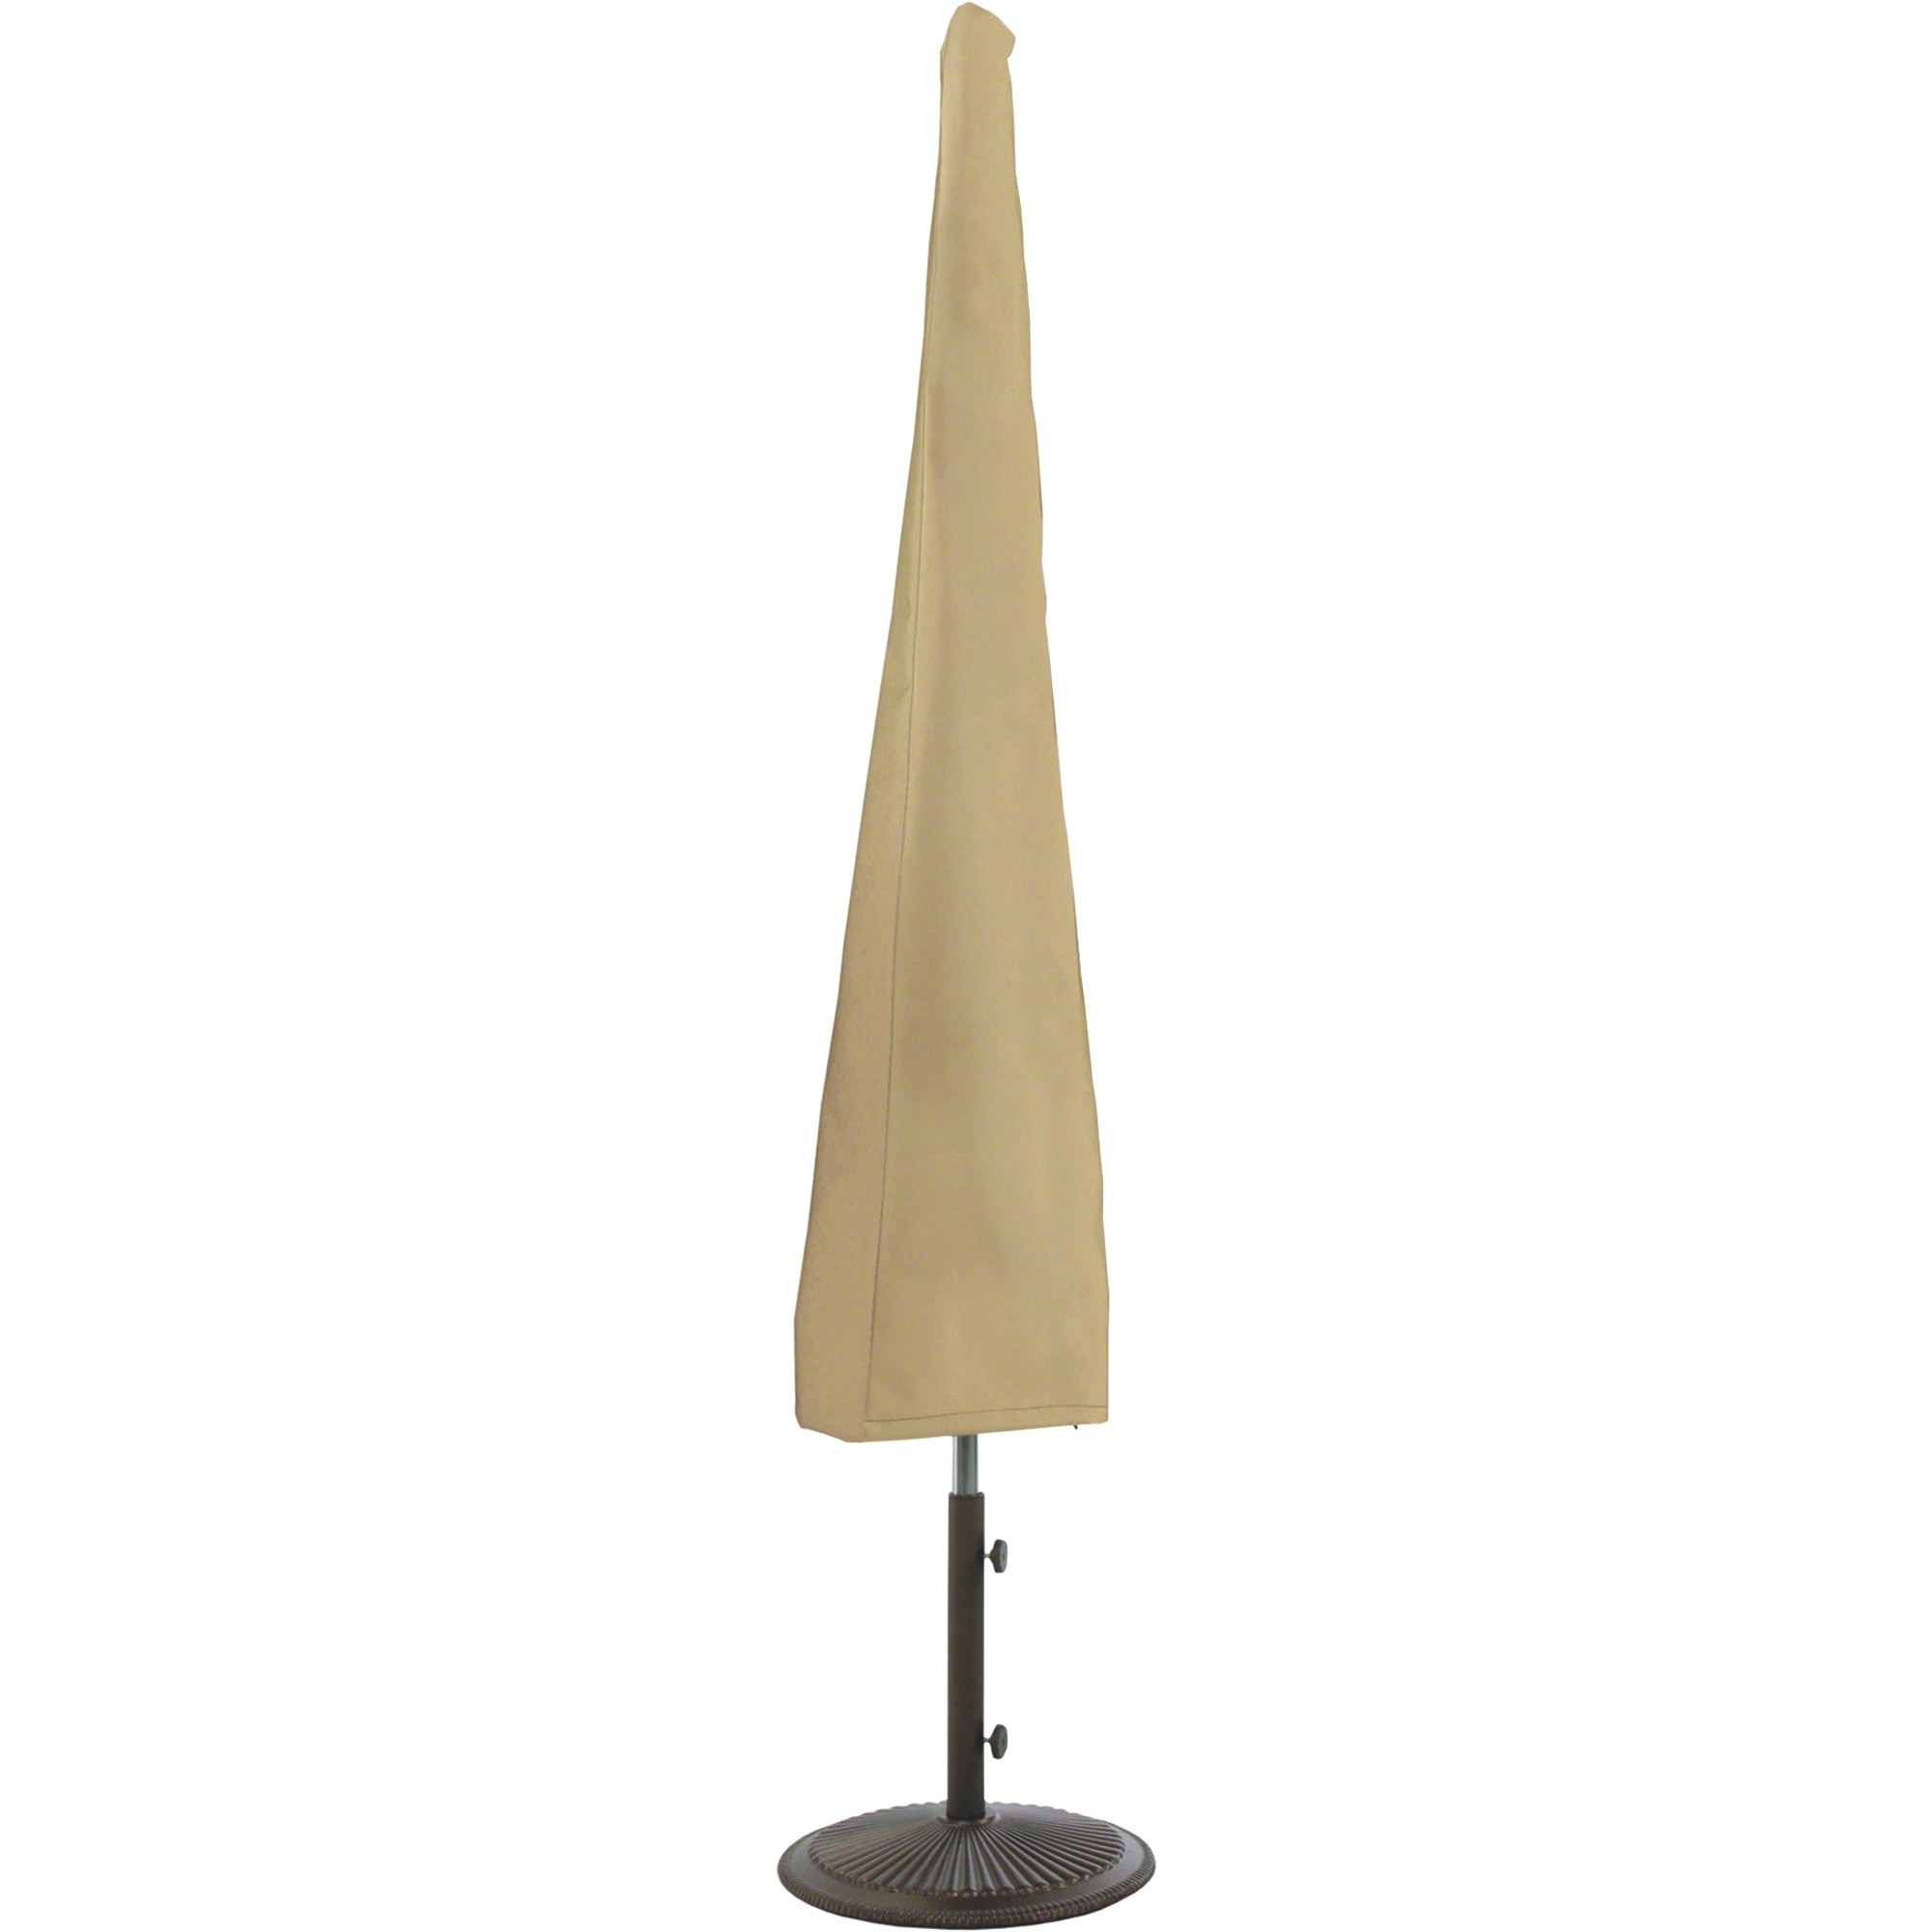 Classic Accessories Terrazzo Patio Umbrella Cover, Fits 11ft. Diameter or 8ft. Square Patio and Market Umbrellas, Sand, Model 58902-EC